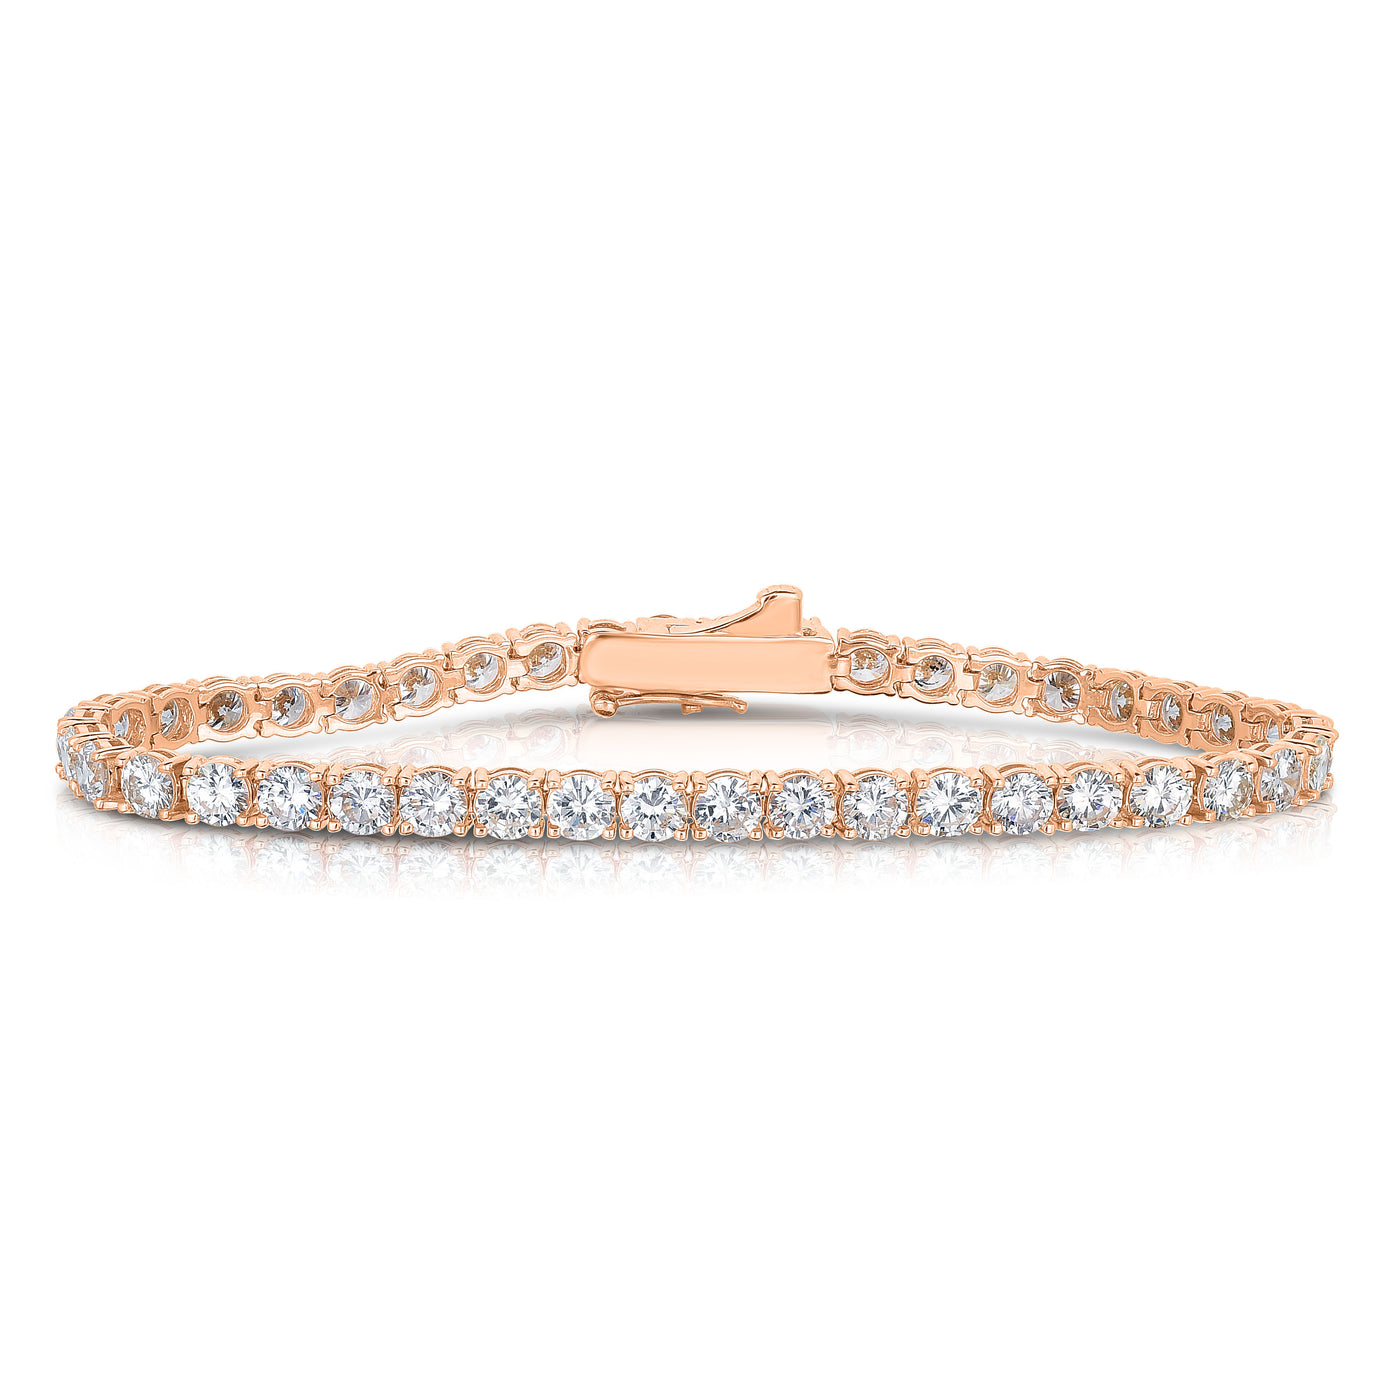 DRITA - The Classic Diamond Tennis Bracelet